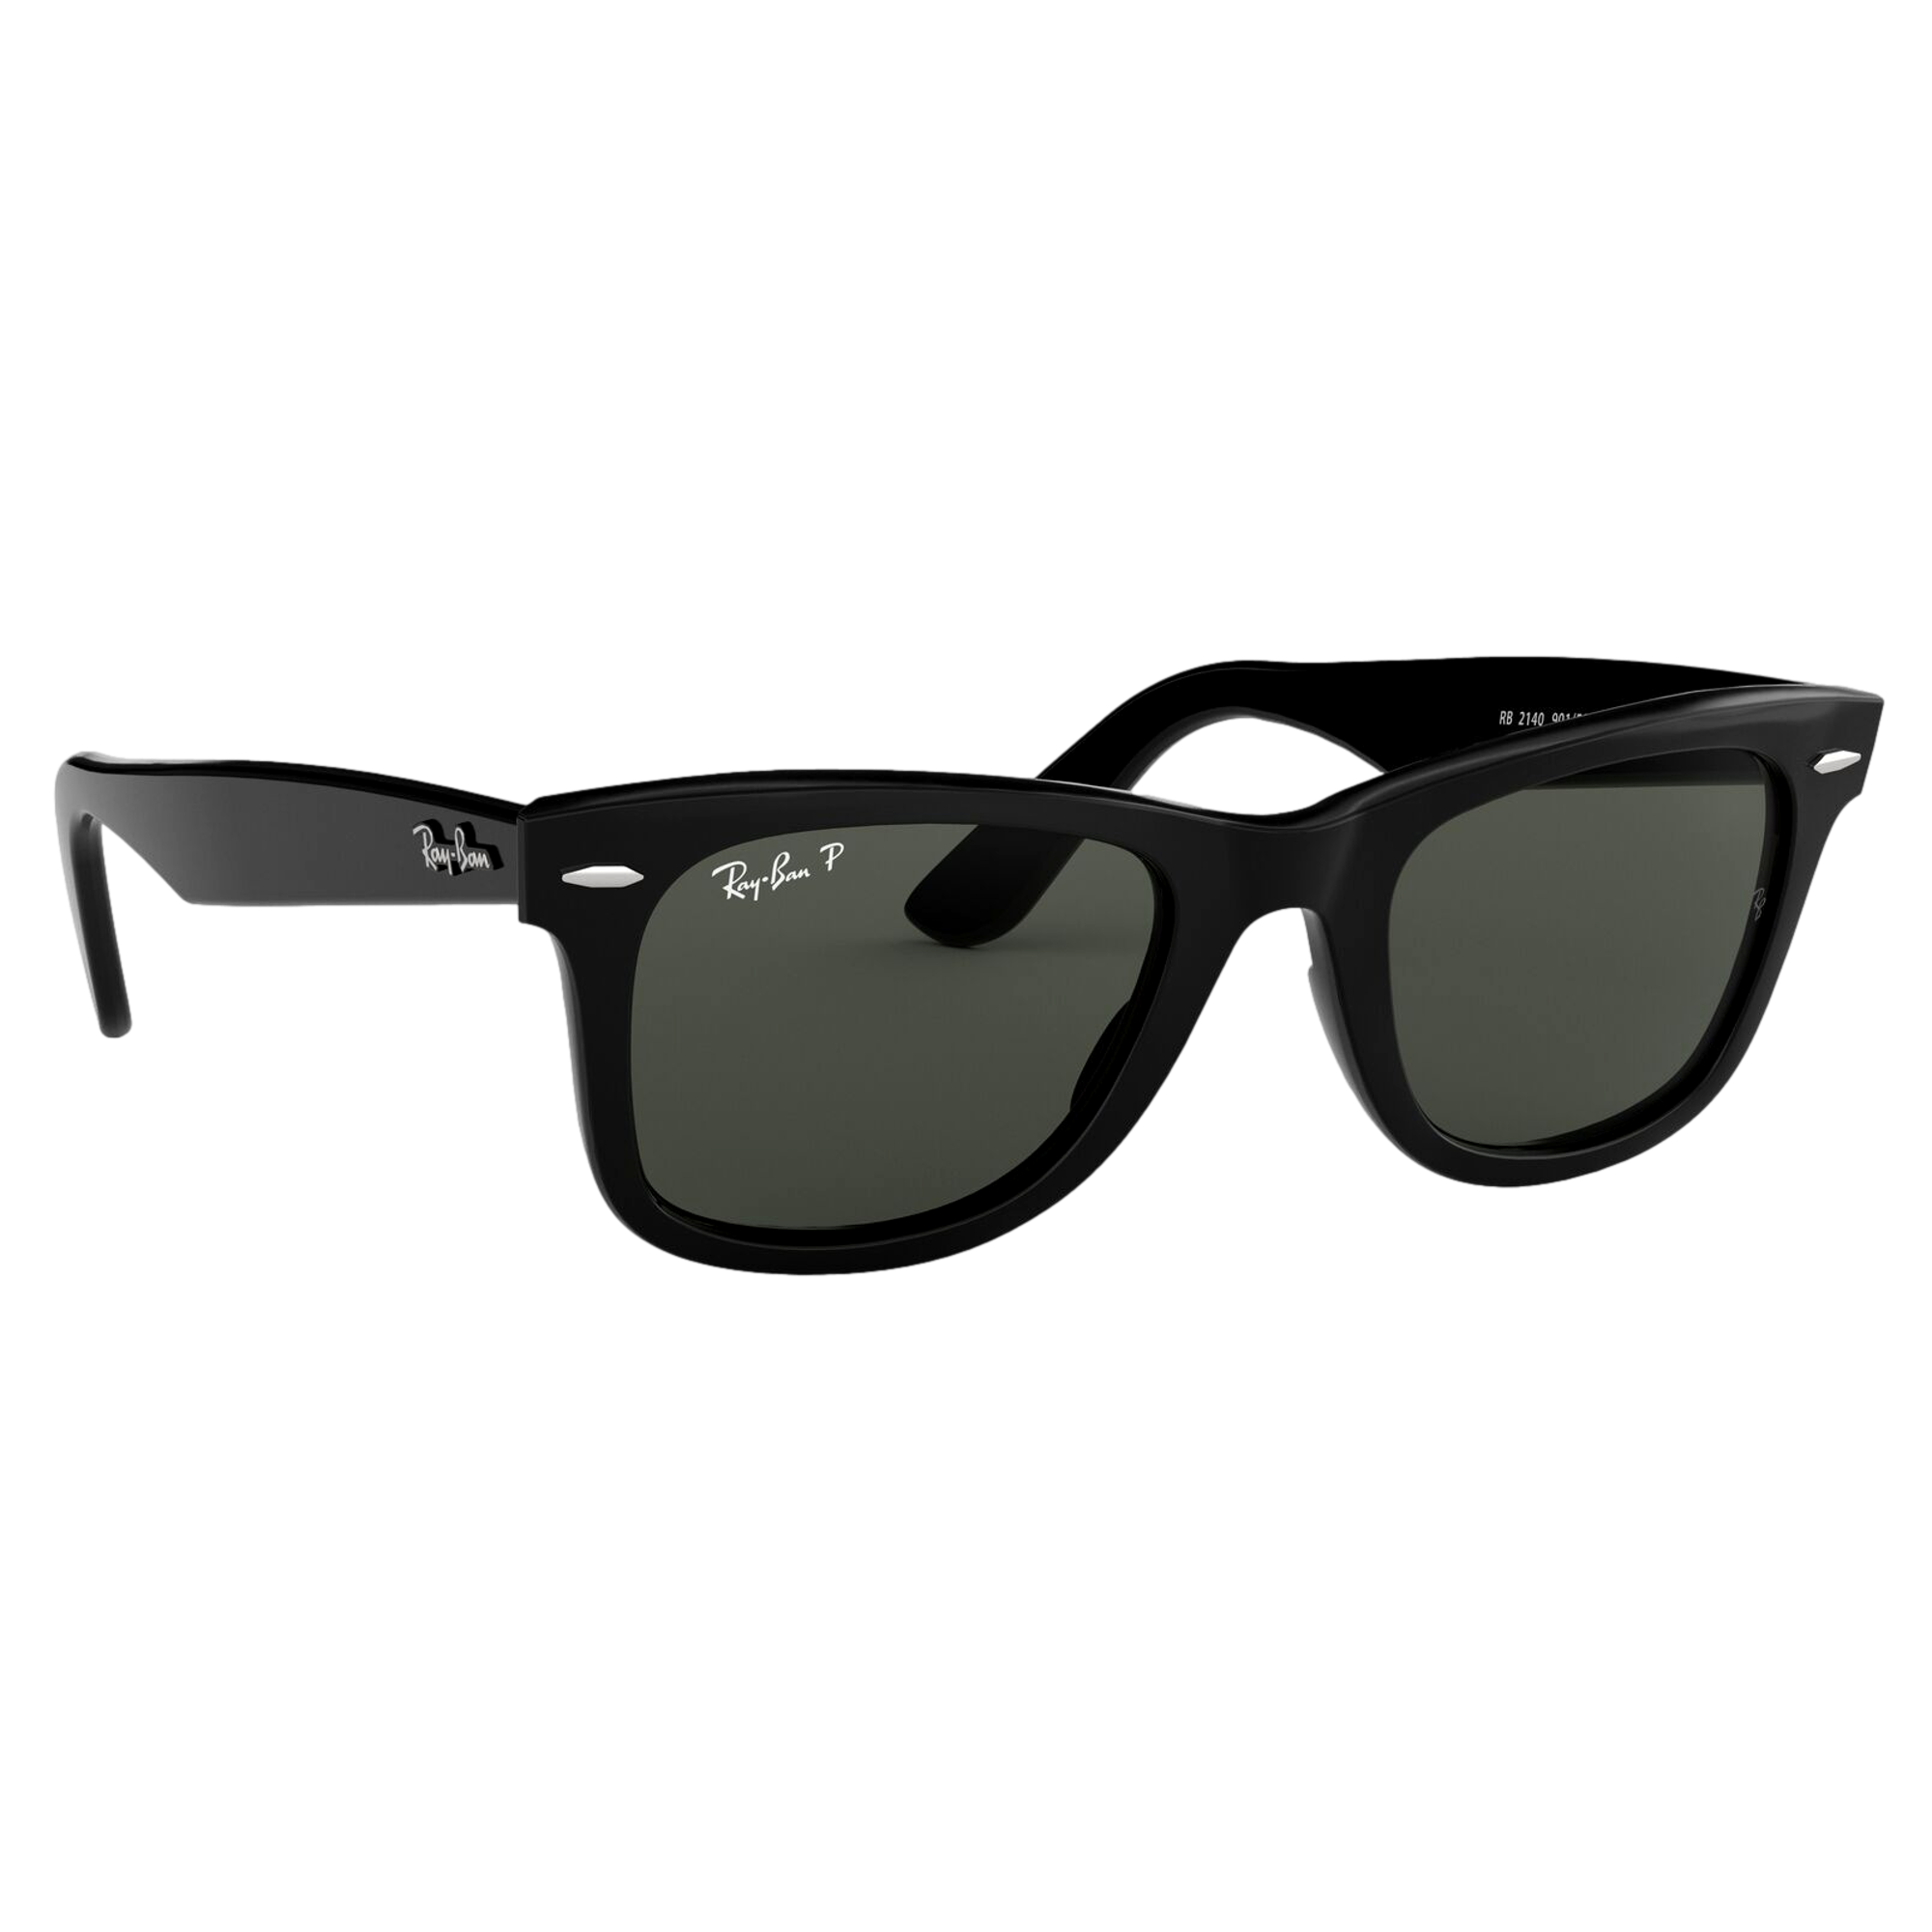 Original Wayfarer Polarized Sunglasses